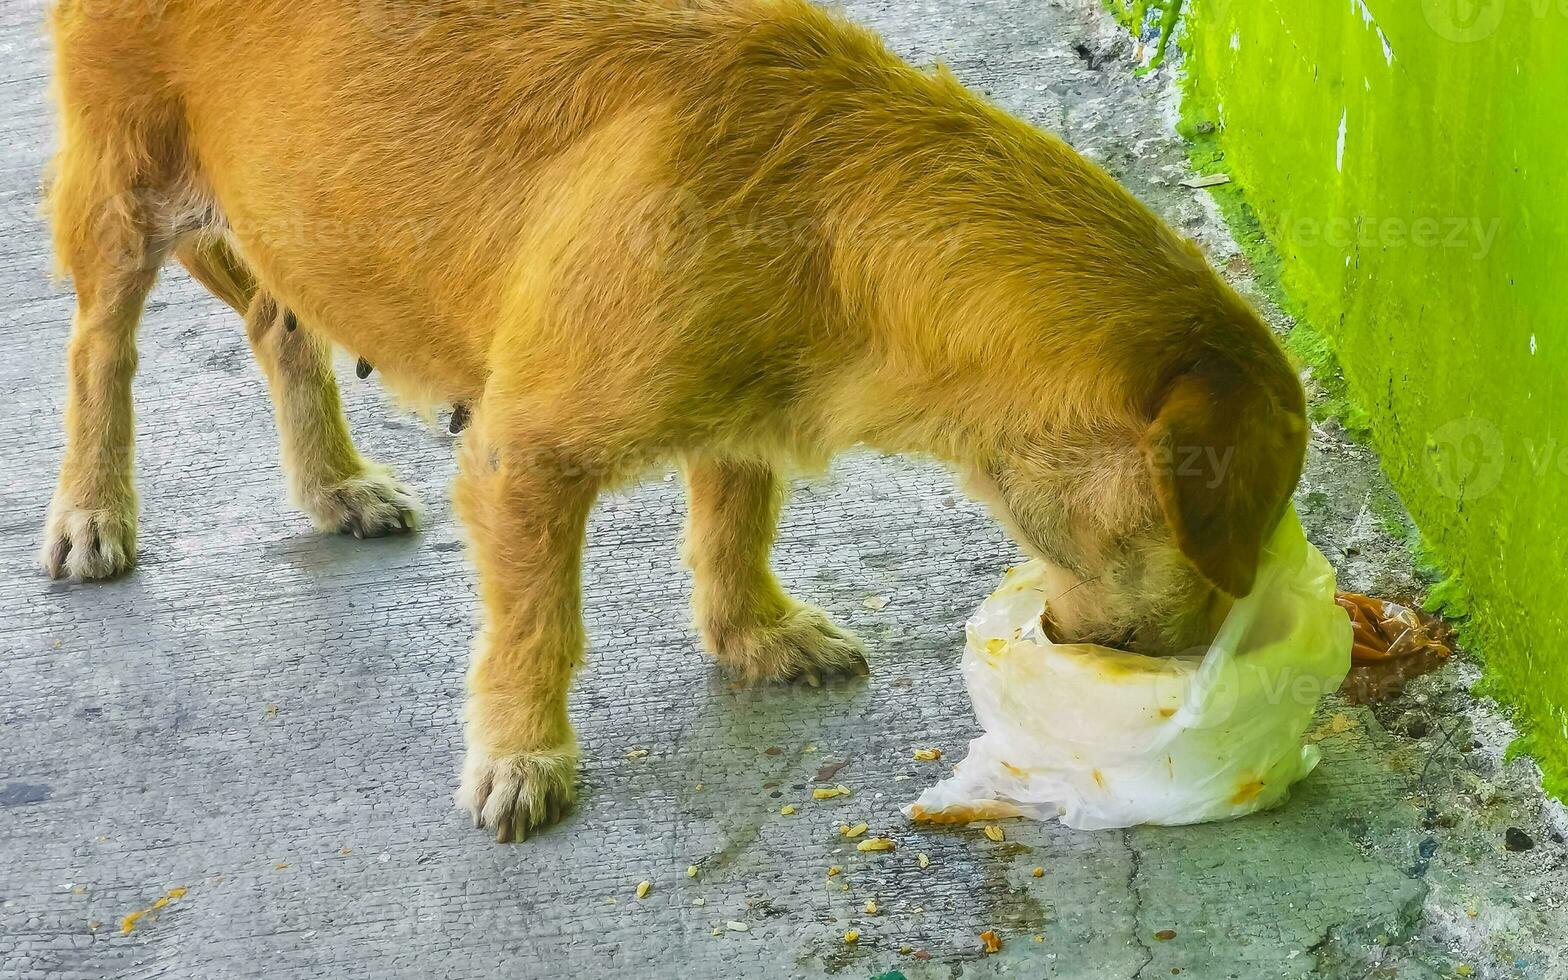 hongerig verdwaald hond eet voedsel kladjes van de straat Mexico. foto